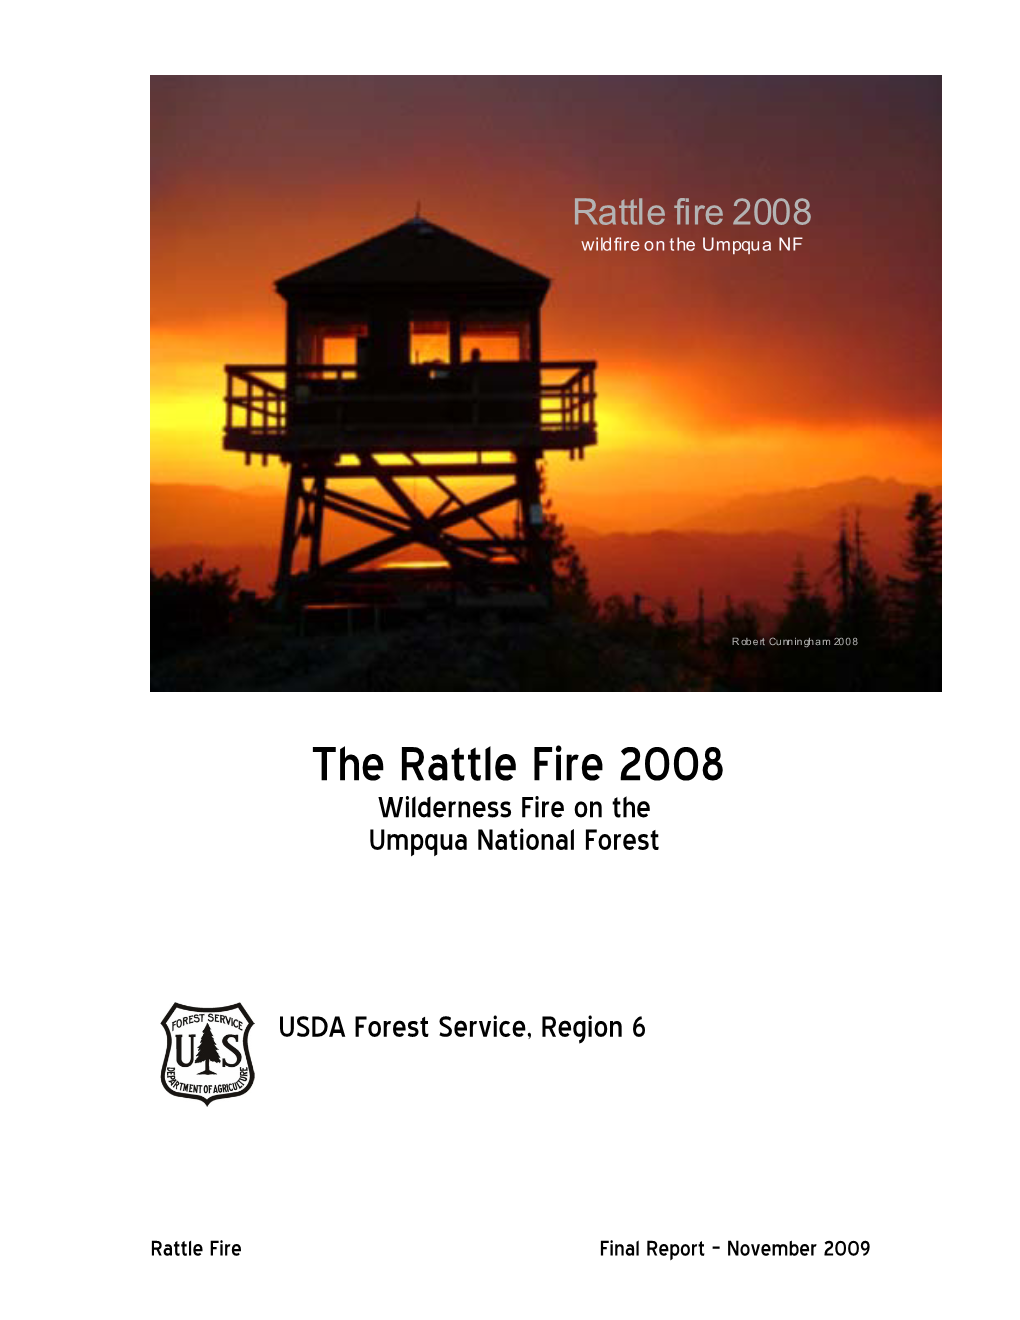 Rattle Fire 2008 Wildfire on the Umpqua NF